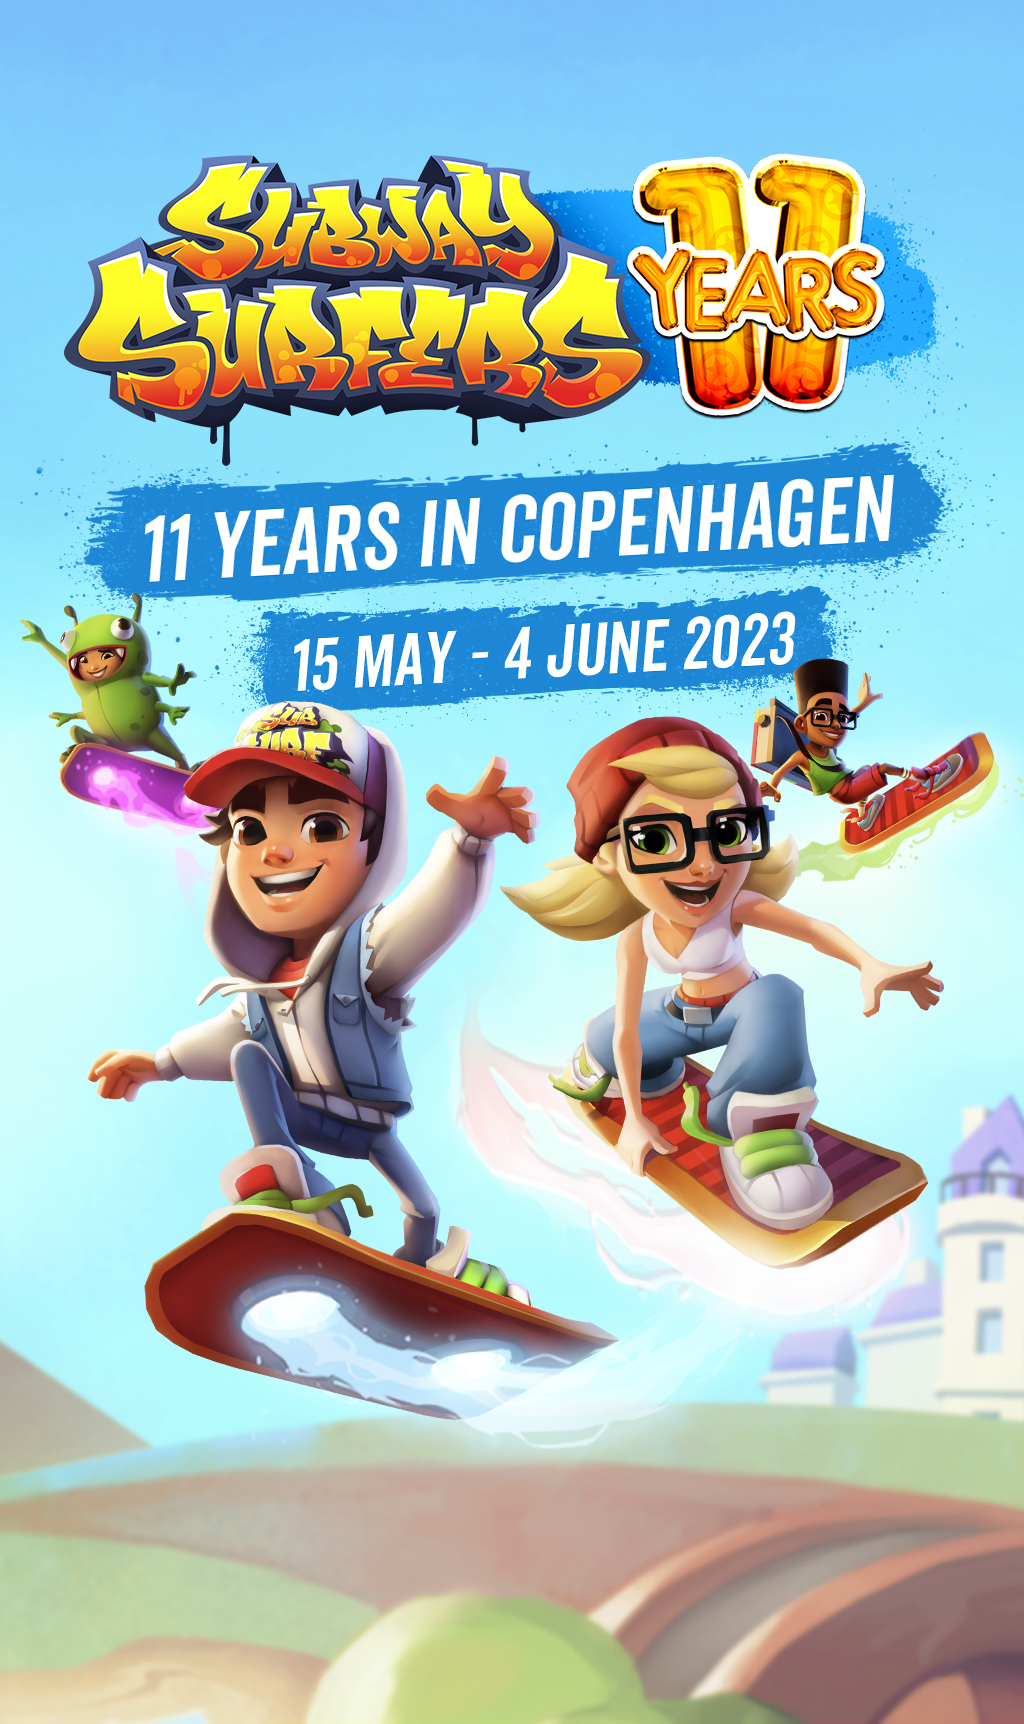 Subway Surfers World Tour 2021 - Copenhagen - NEW UPDATE! 